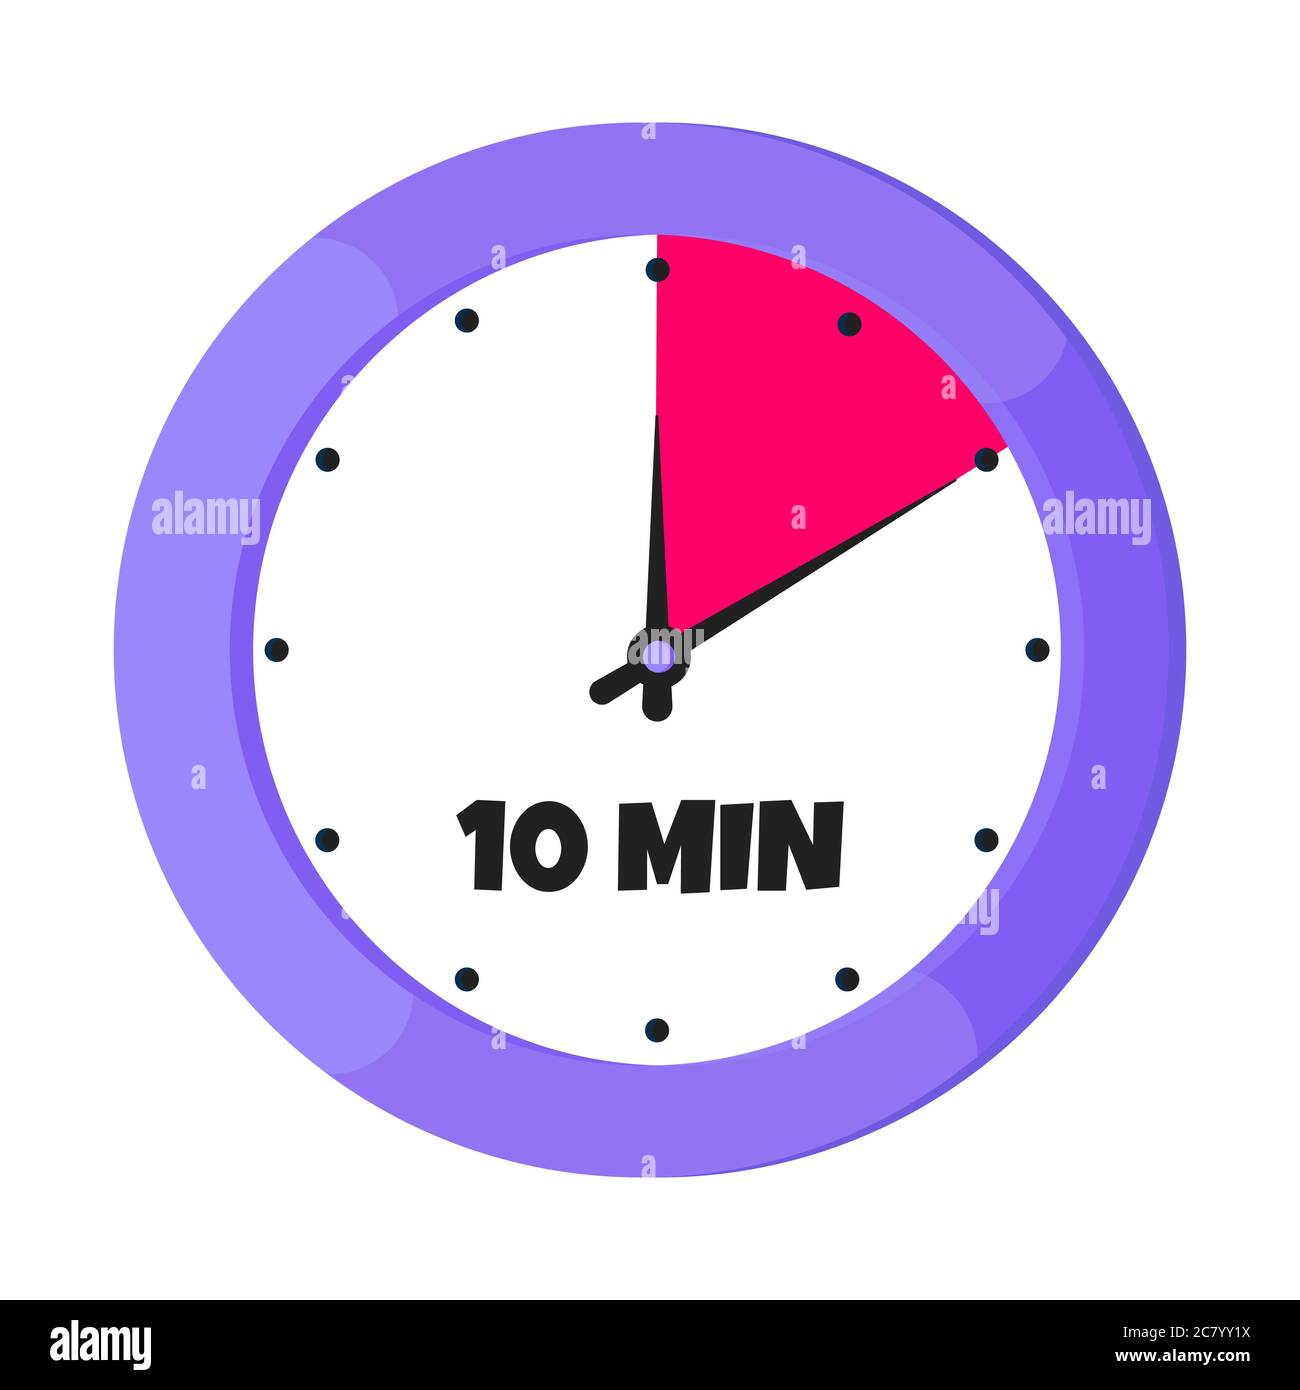 Ten minutes on analog clock face flat style design vector